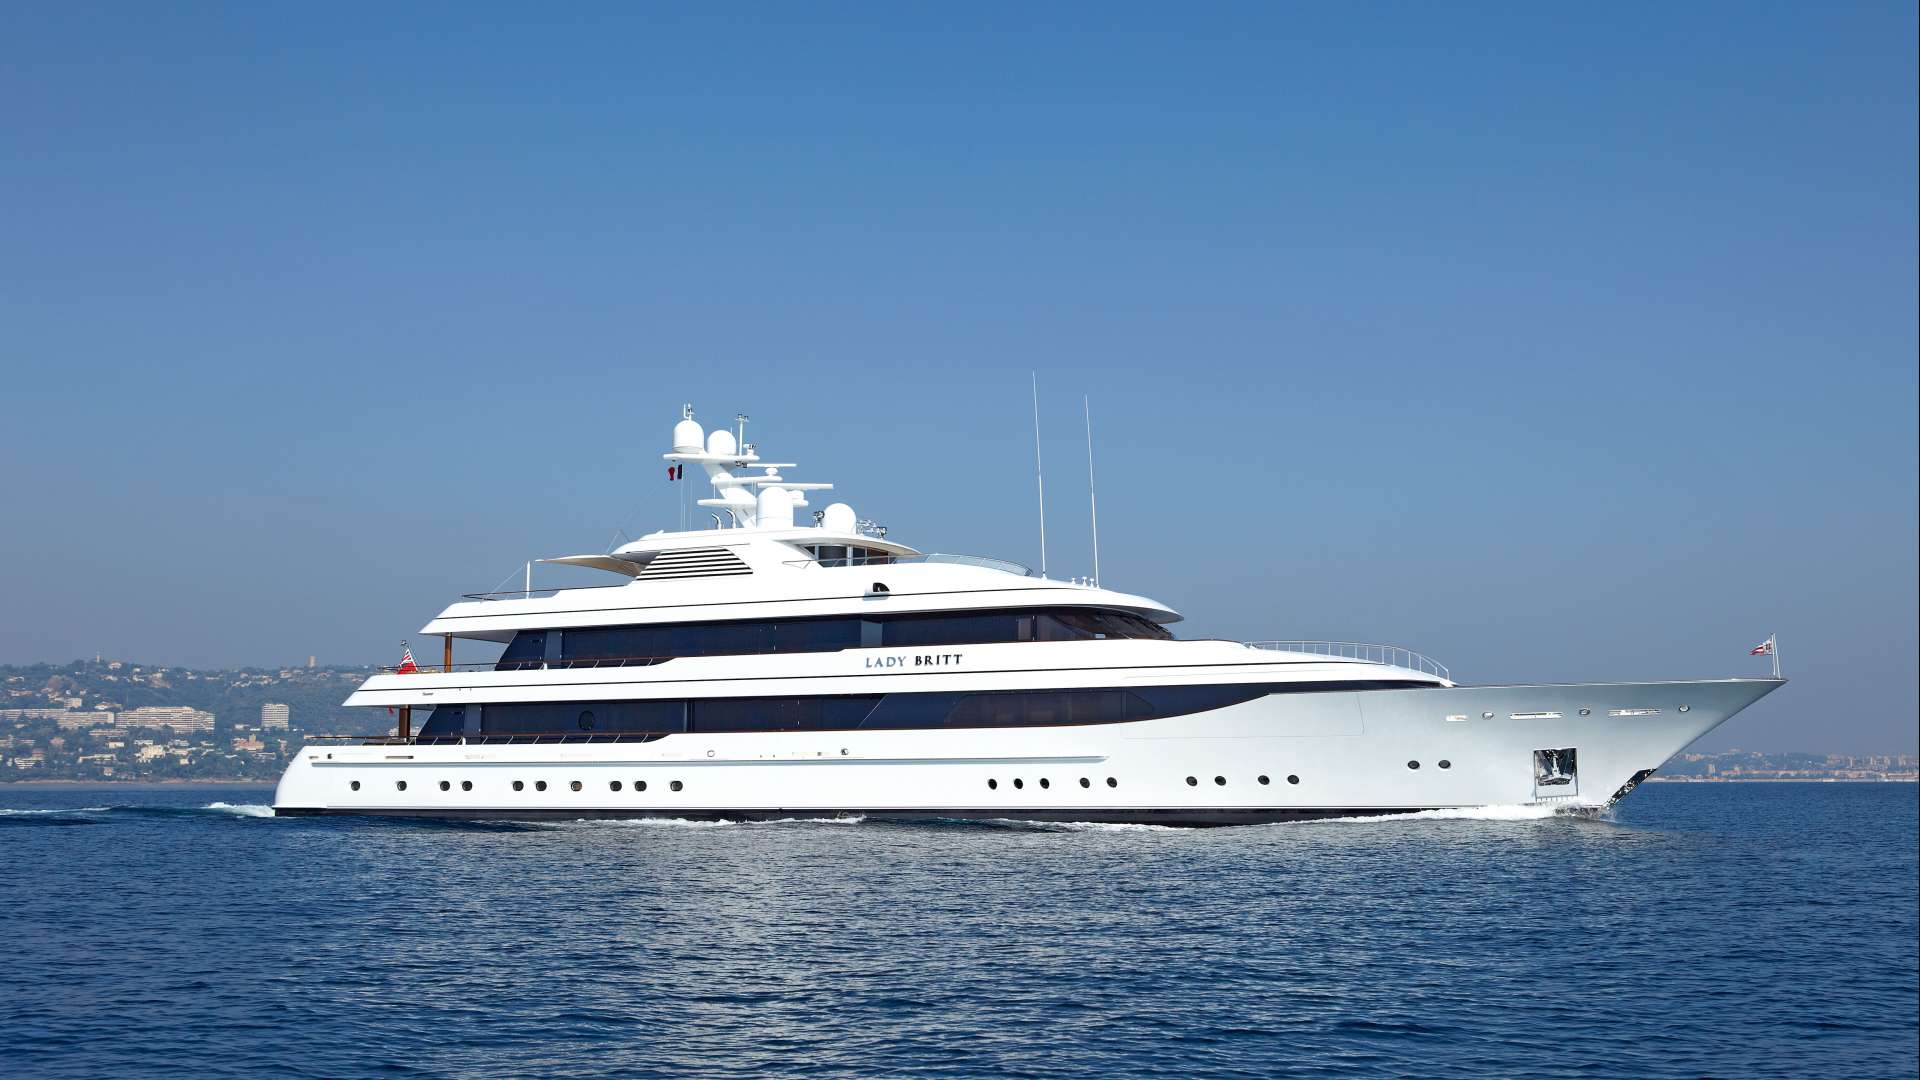 who owns lady britt yacht